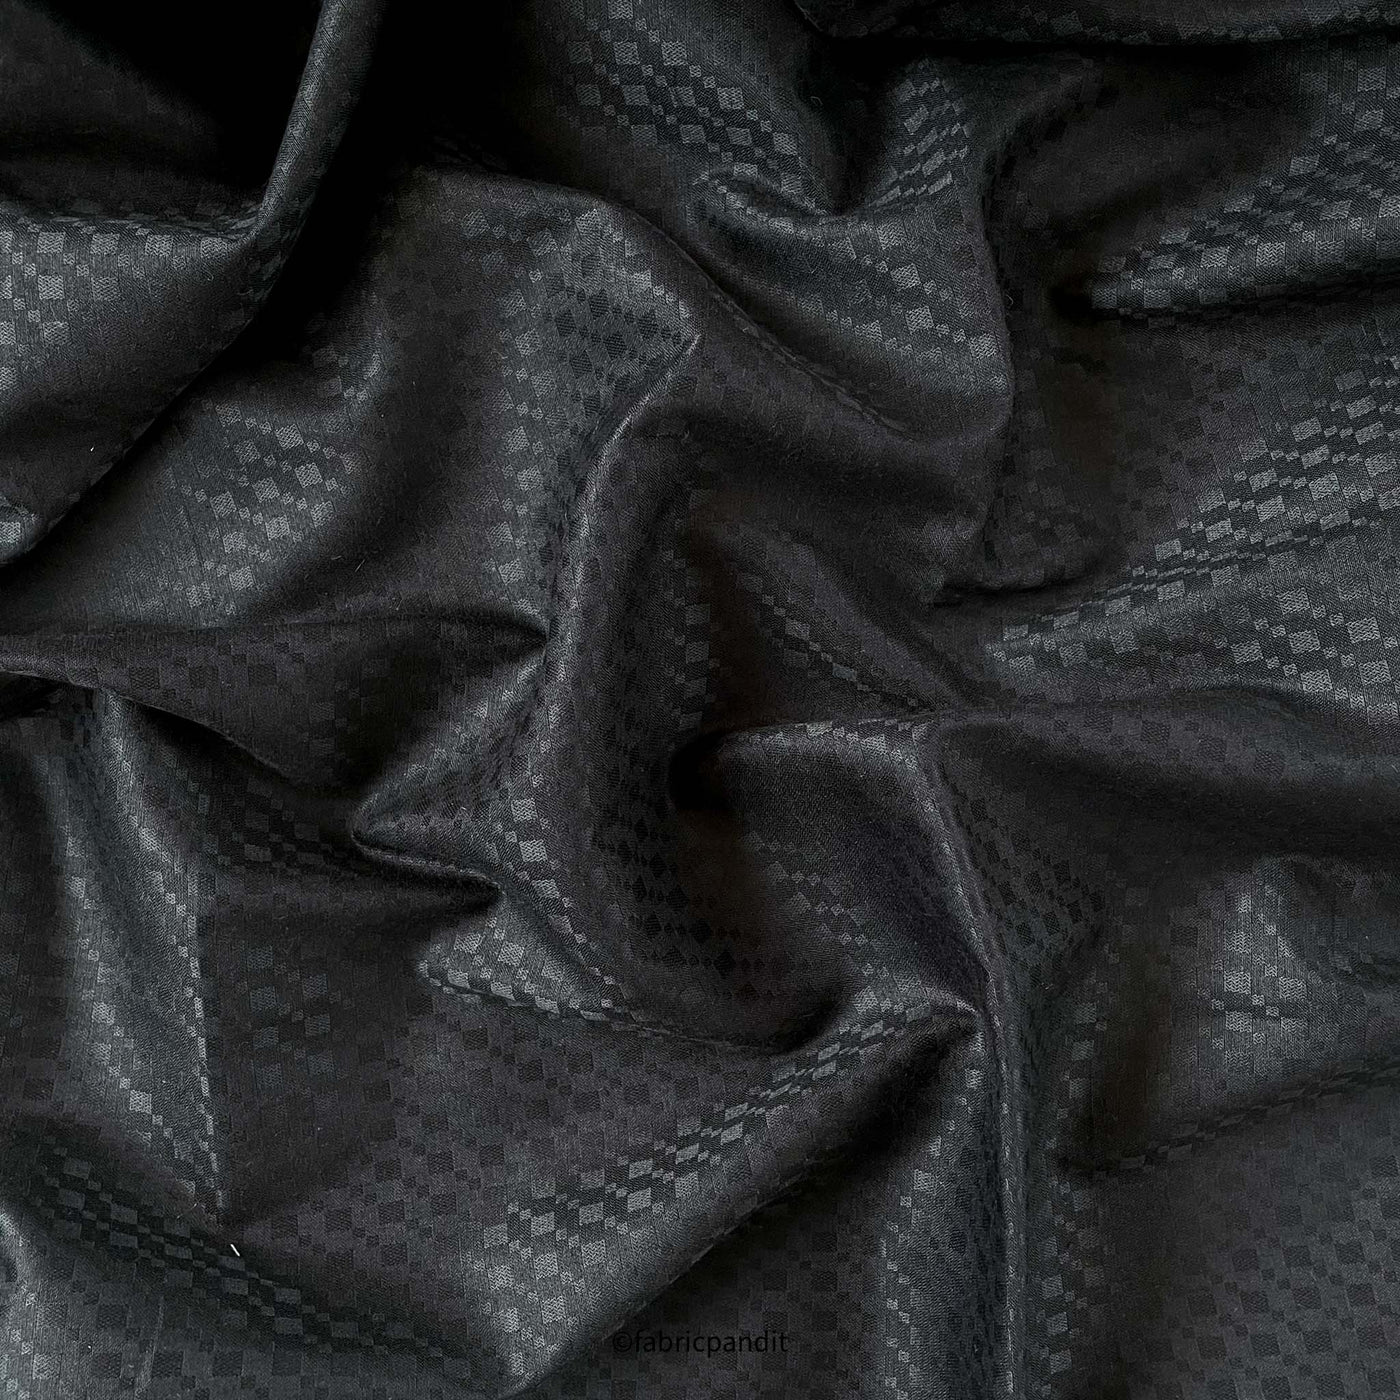 Fabric Pandit Fabric Men's Black Abstract Geometric Checks Cotton Satin Dobby Luxury Shirting Fabric (Width 58 Inches)